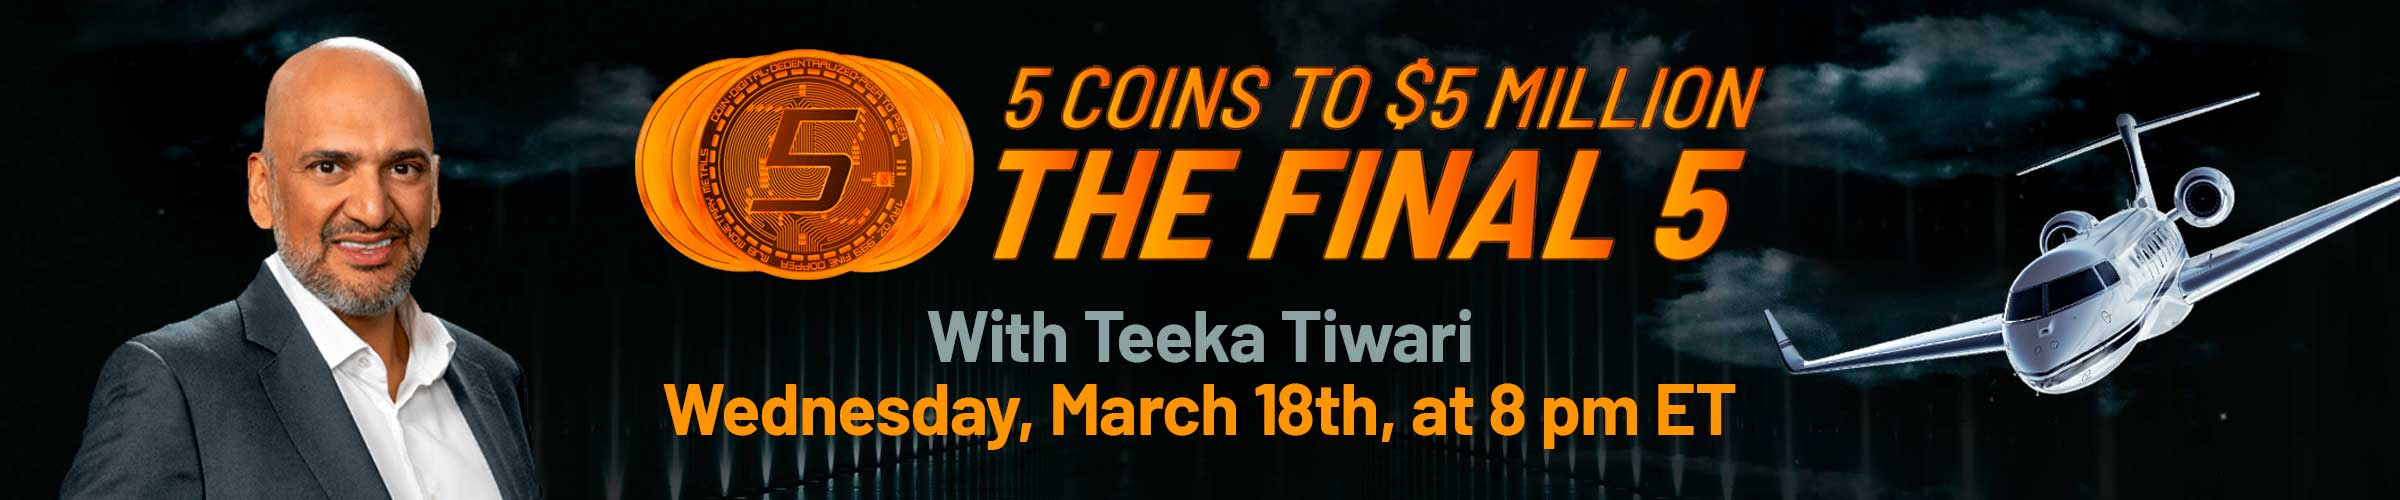 Access Teeka's 5 Coins to $5 Million Buy-List For 2020